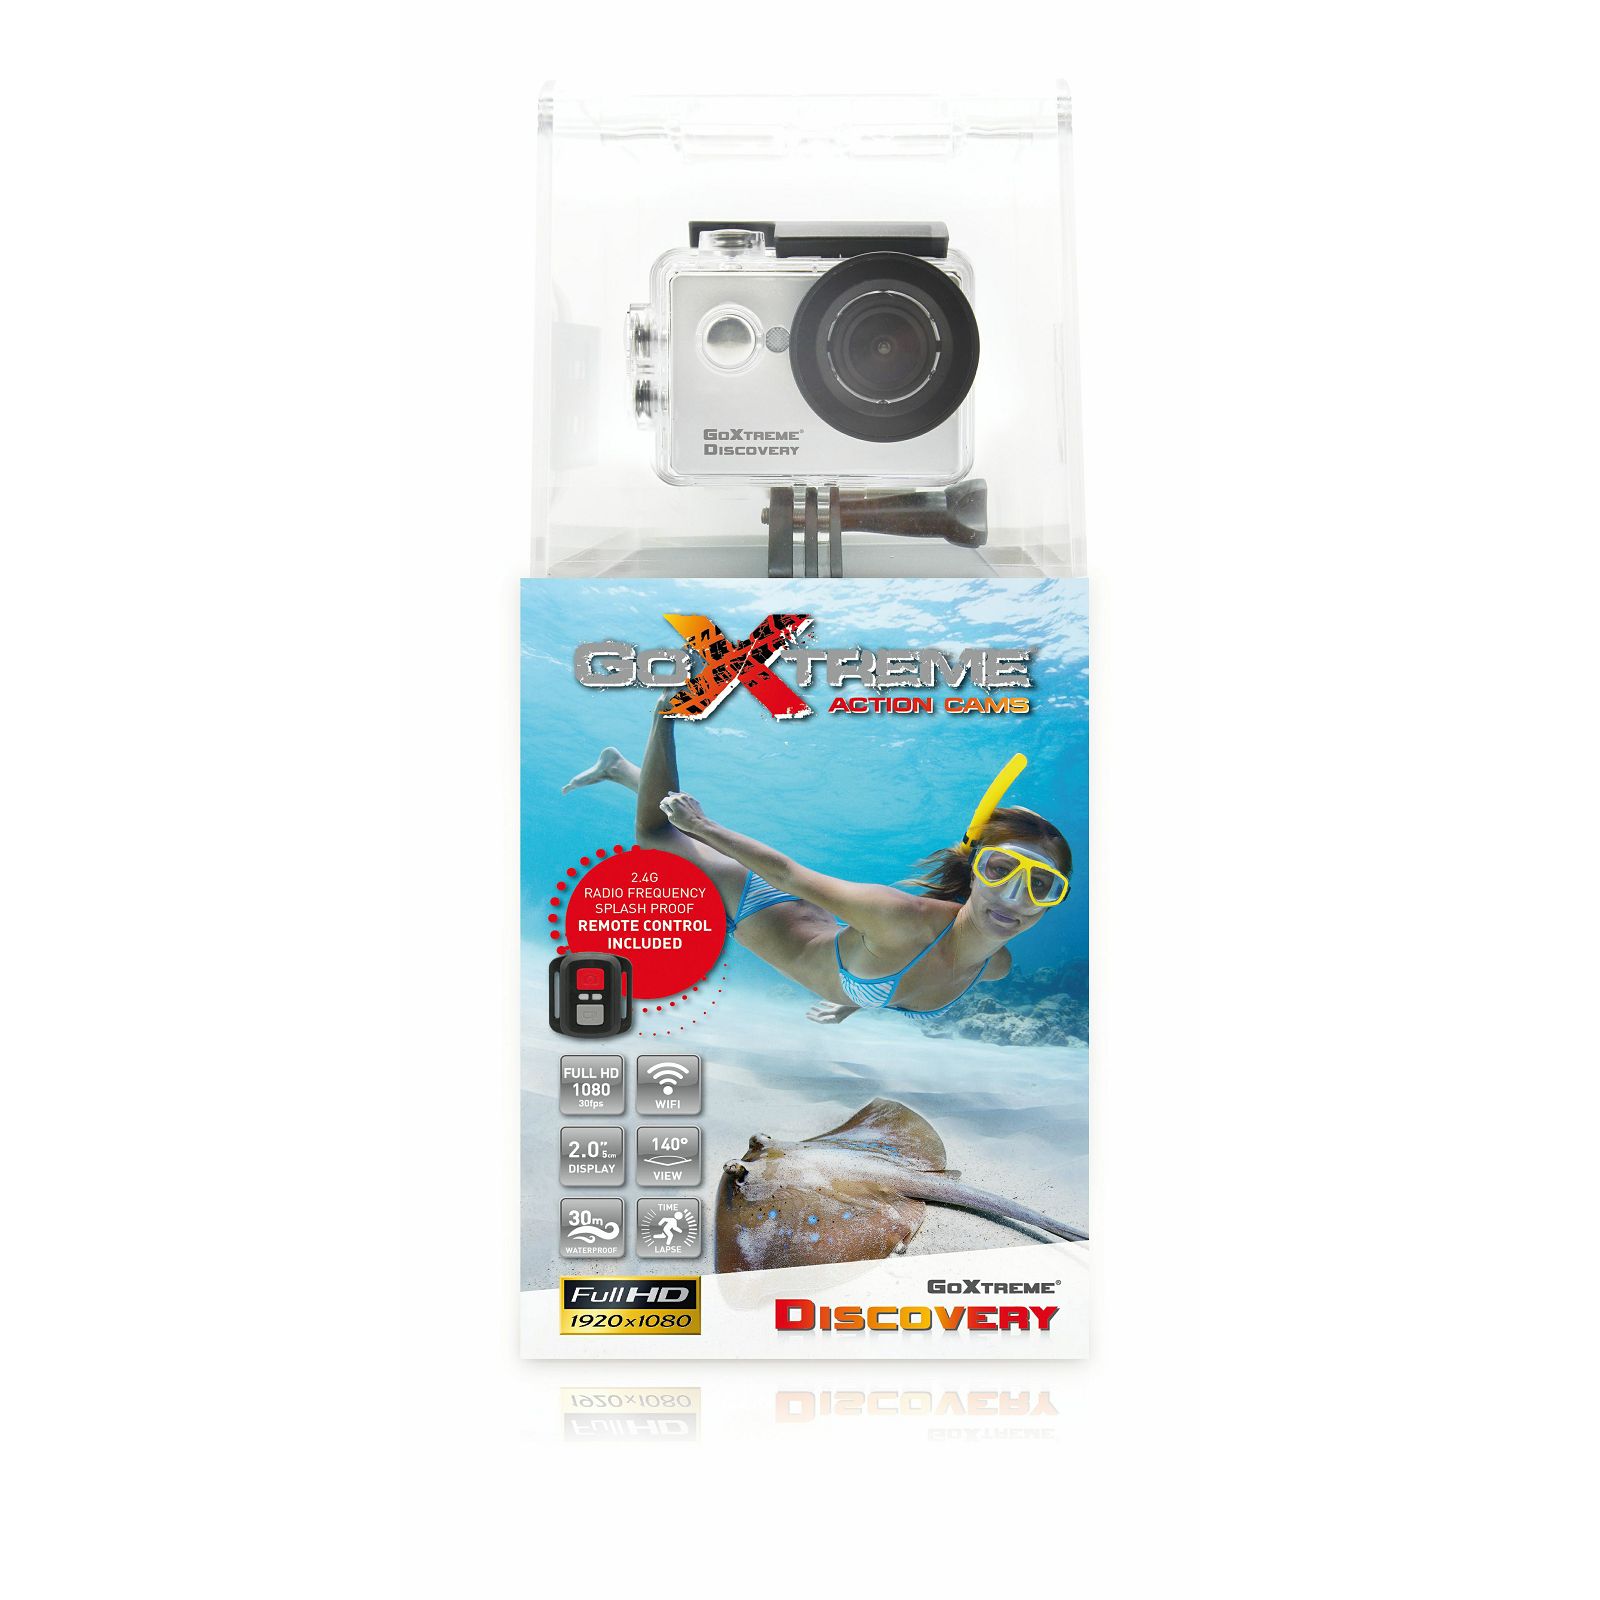 GoXtreme Discovery Action Camera FullHD 1080p 30fps 5MP WiFi Waterproof sportska akcijska kamera vodootporna do 30m (20136)